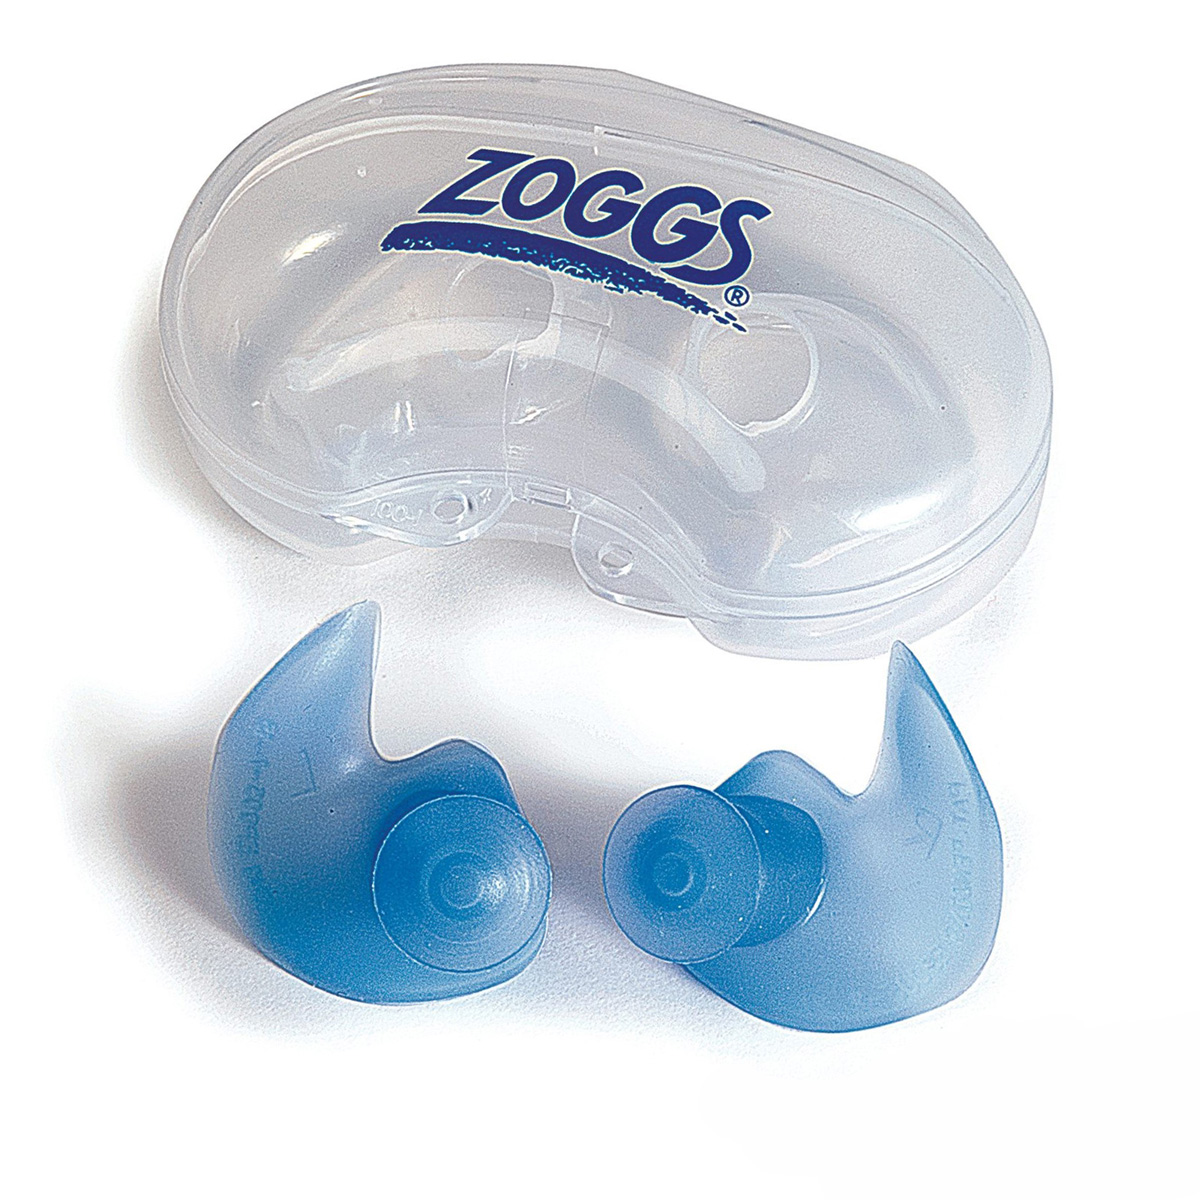 Zoggs Aqua Ear Plugz/Earplugs Adult Size 